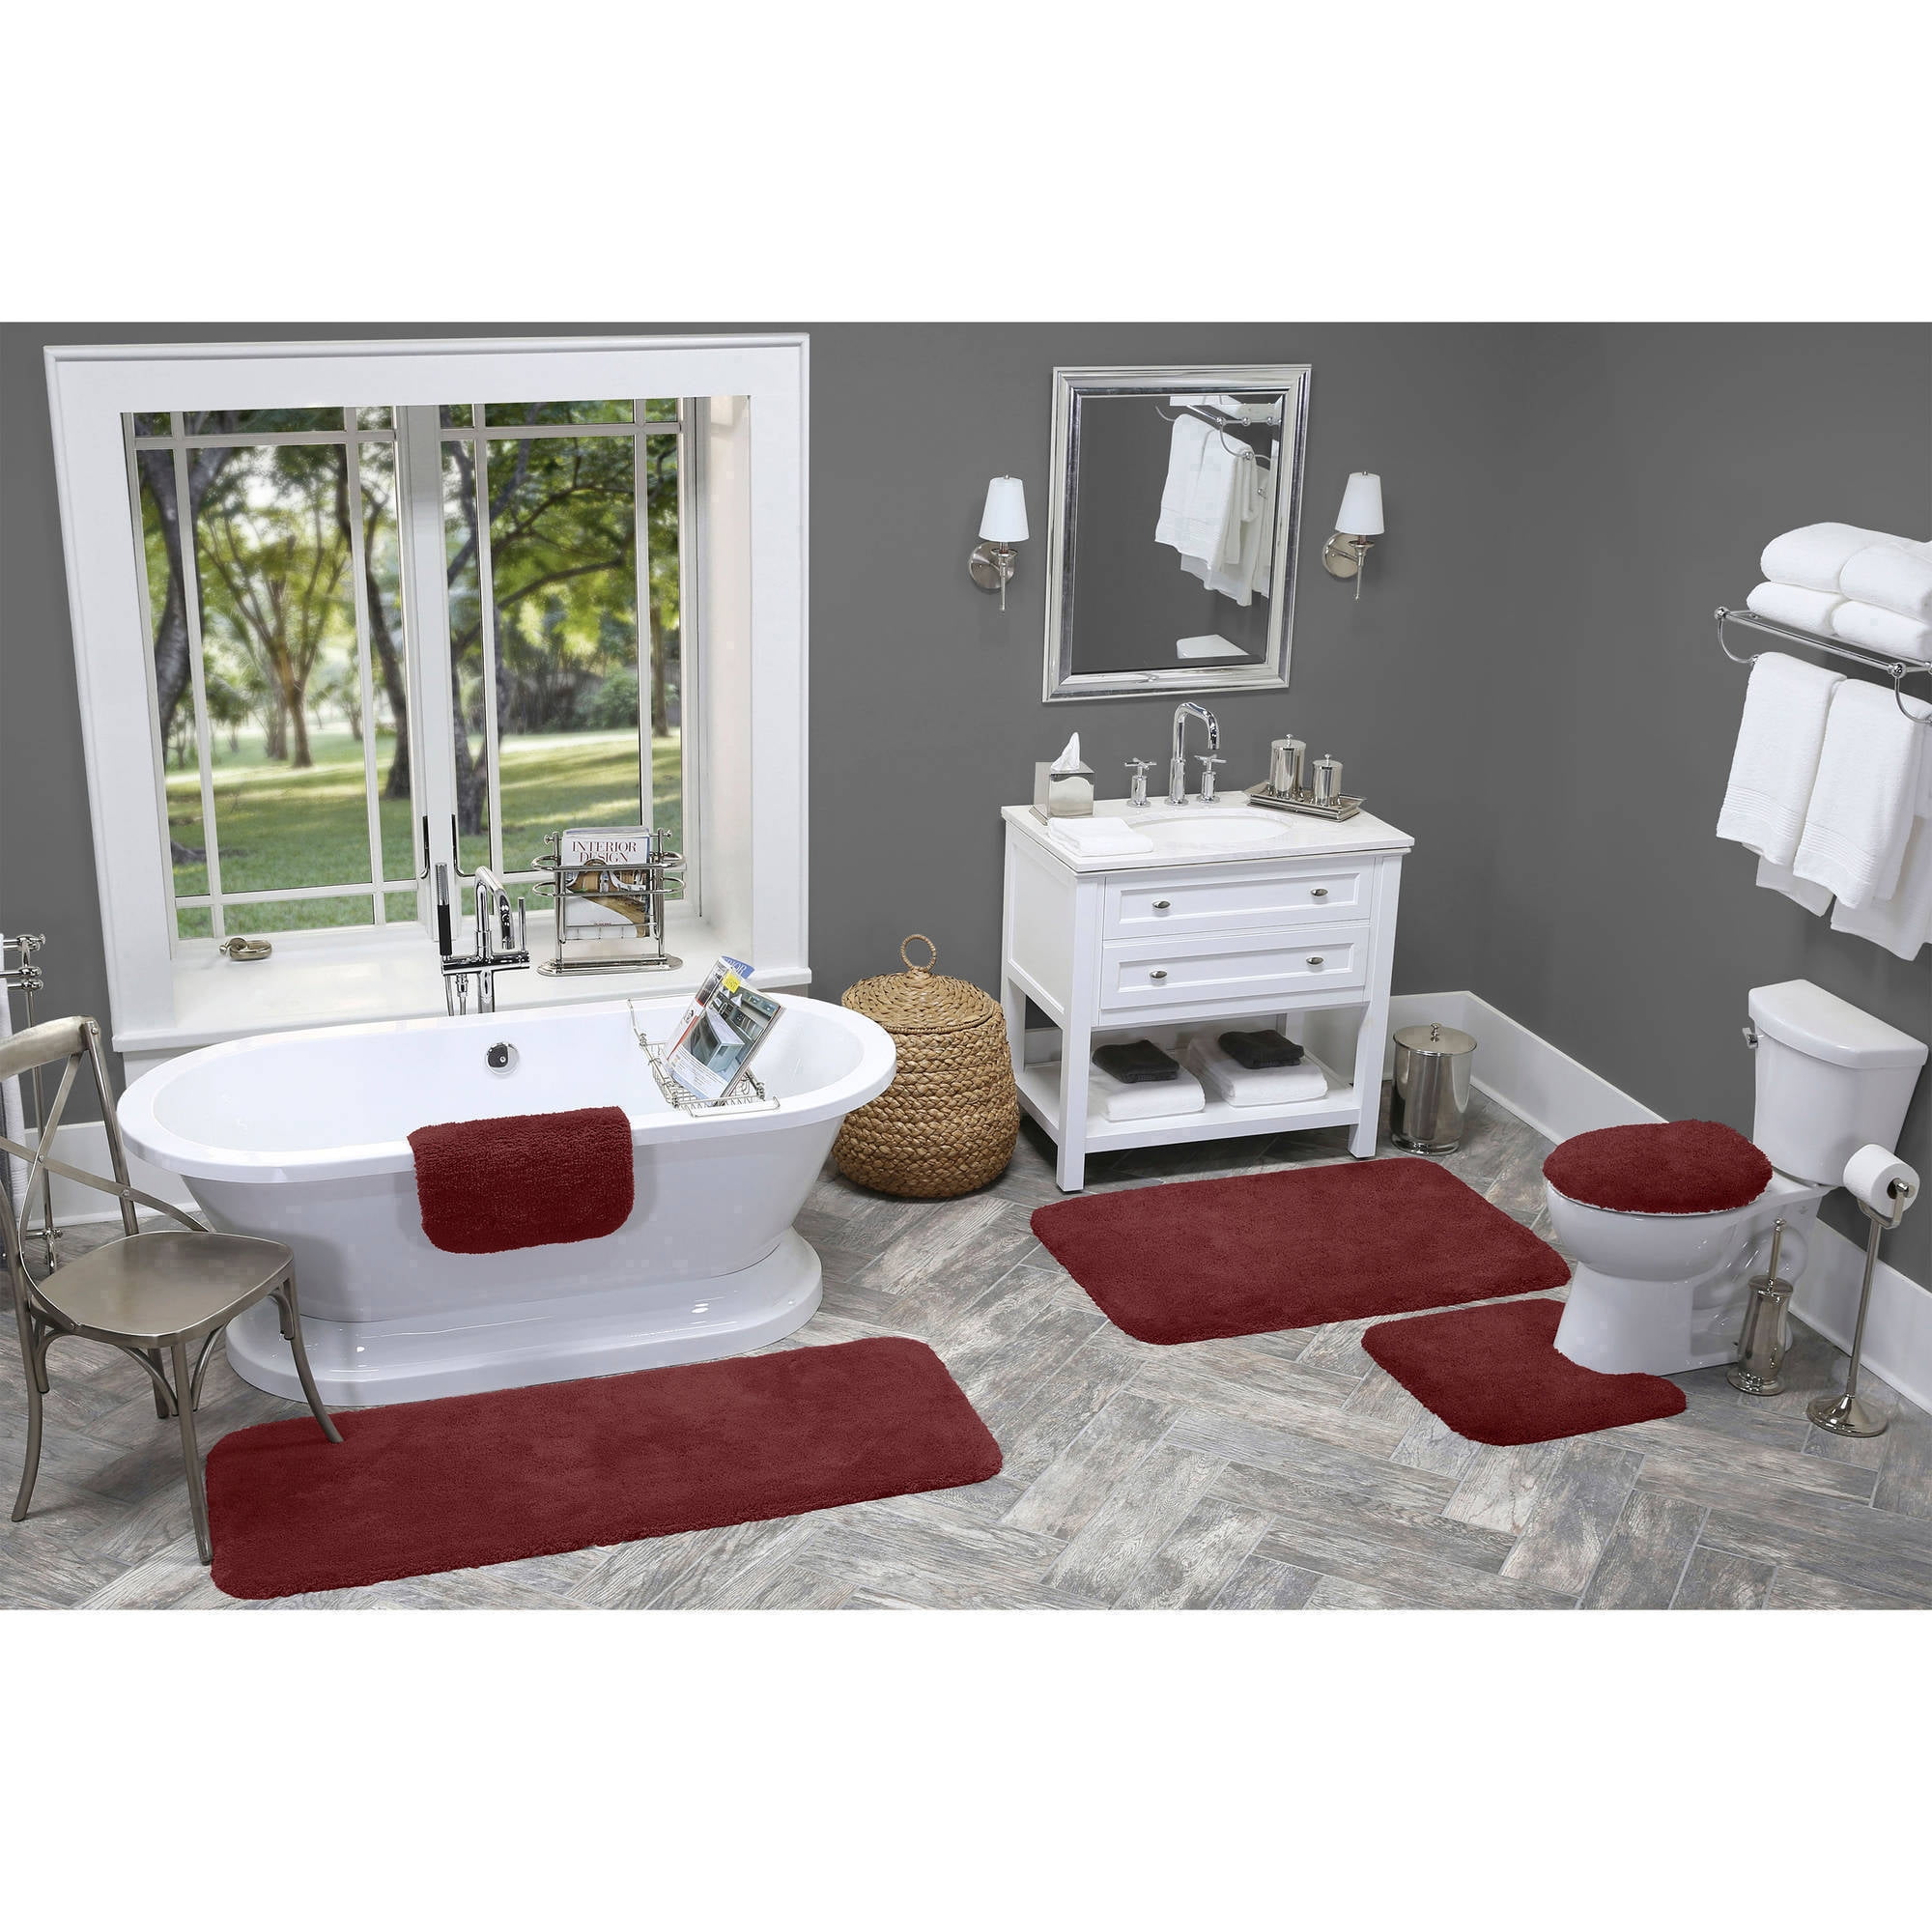 InterestPrint Bathroom Rugs Microfiber Bath Shower Mat Non-Slip Absorbent Shaggy Carpet Bath Mat Holly Leaves and Berries